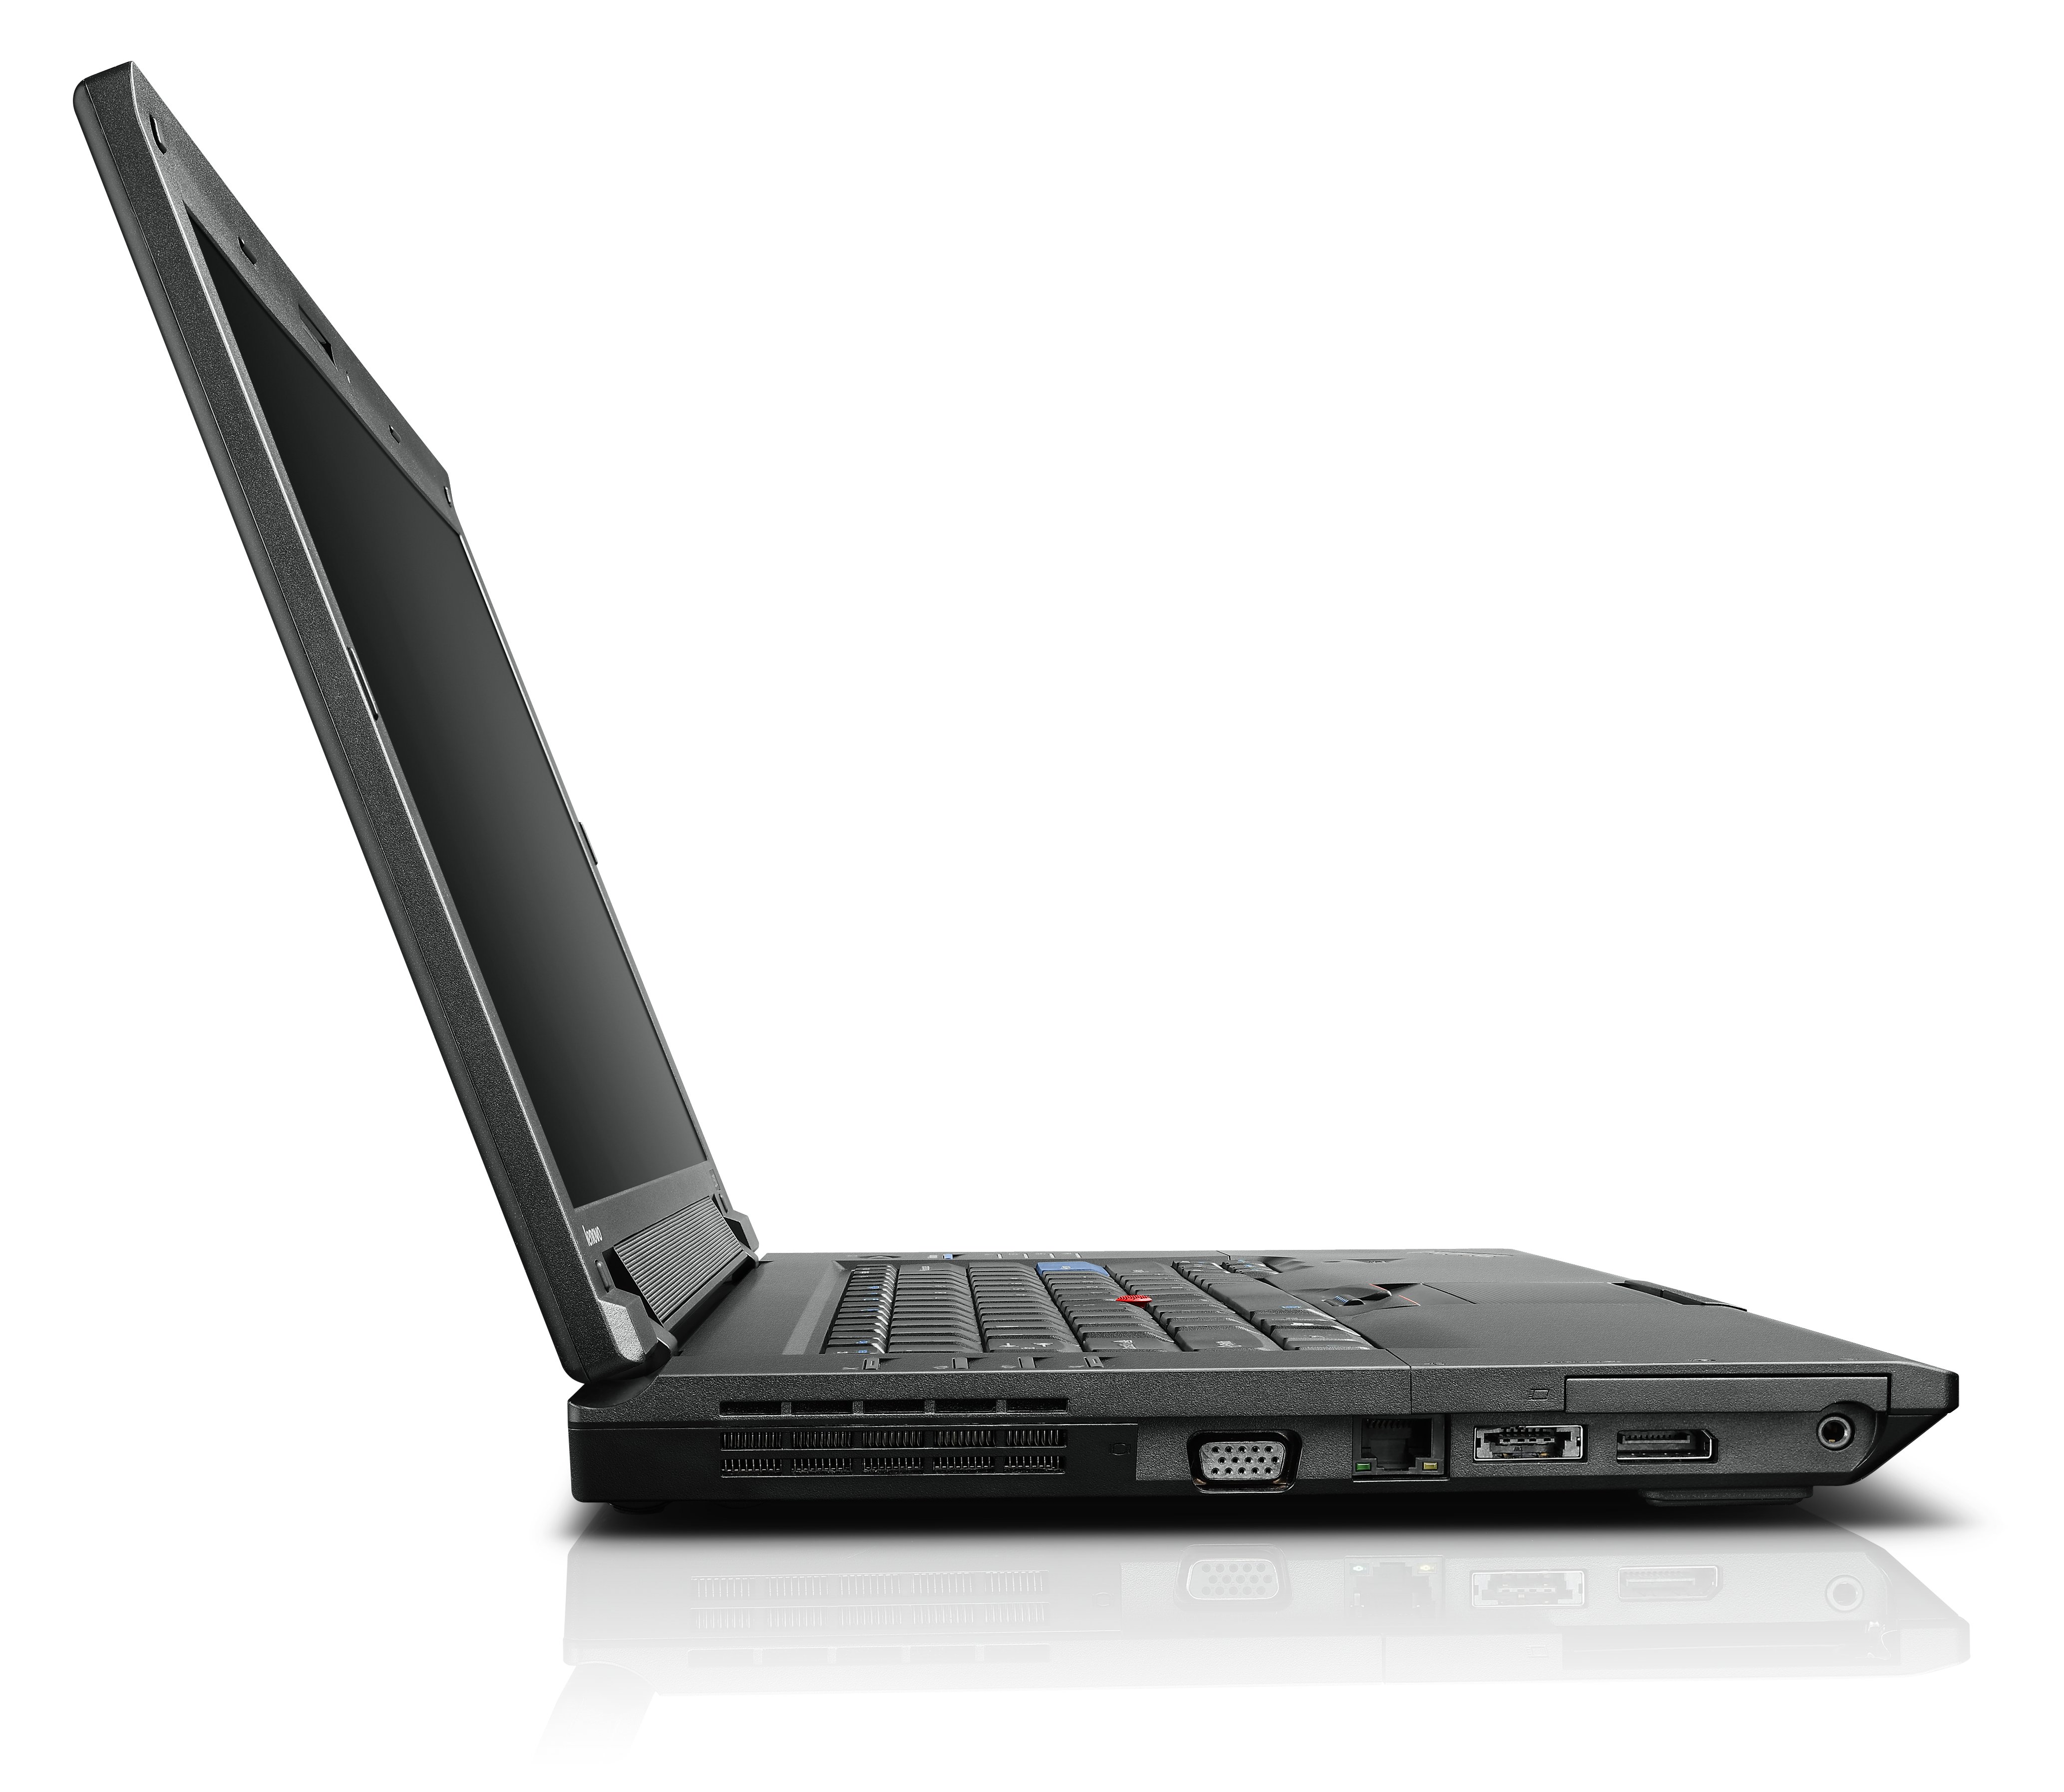 Lenovo ThinkPad L420 Details, Specs and Photos